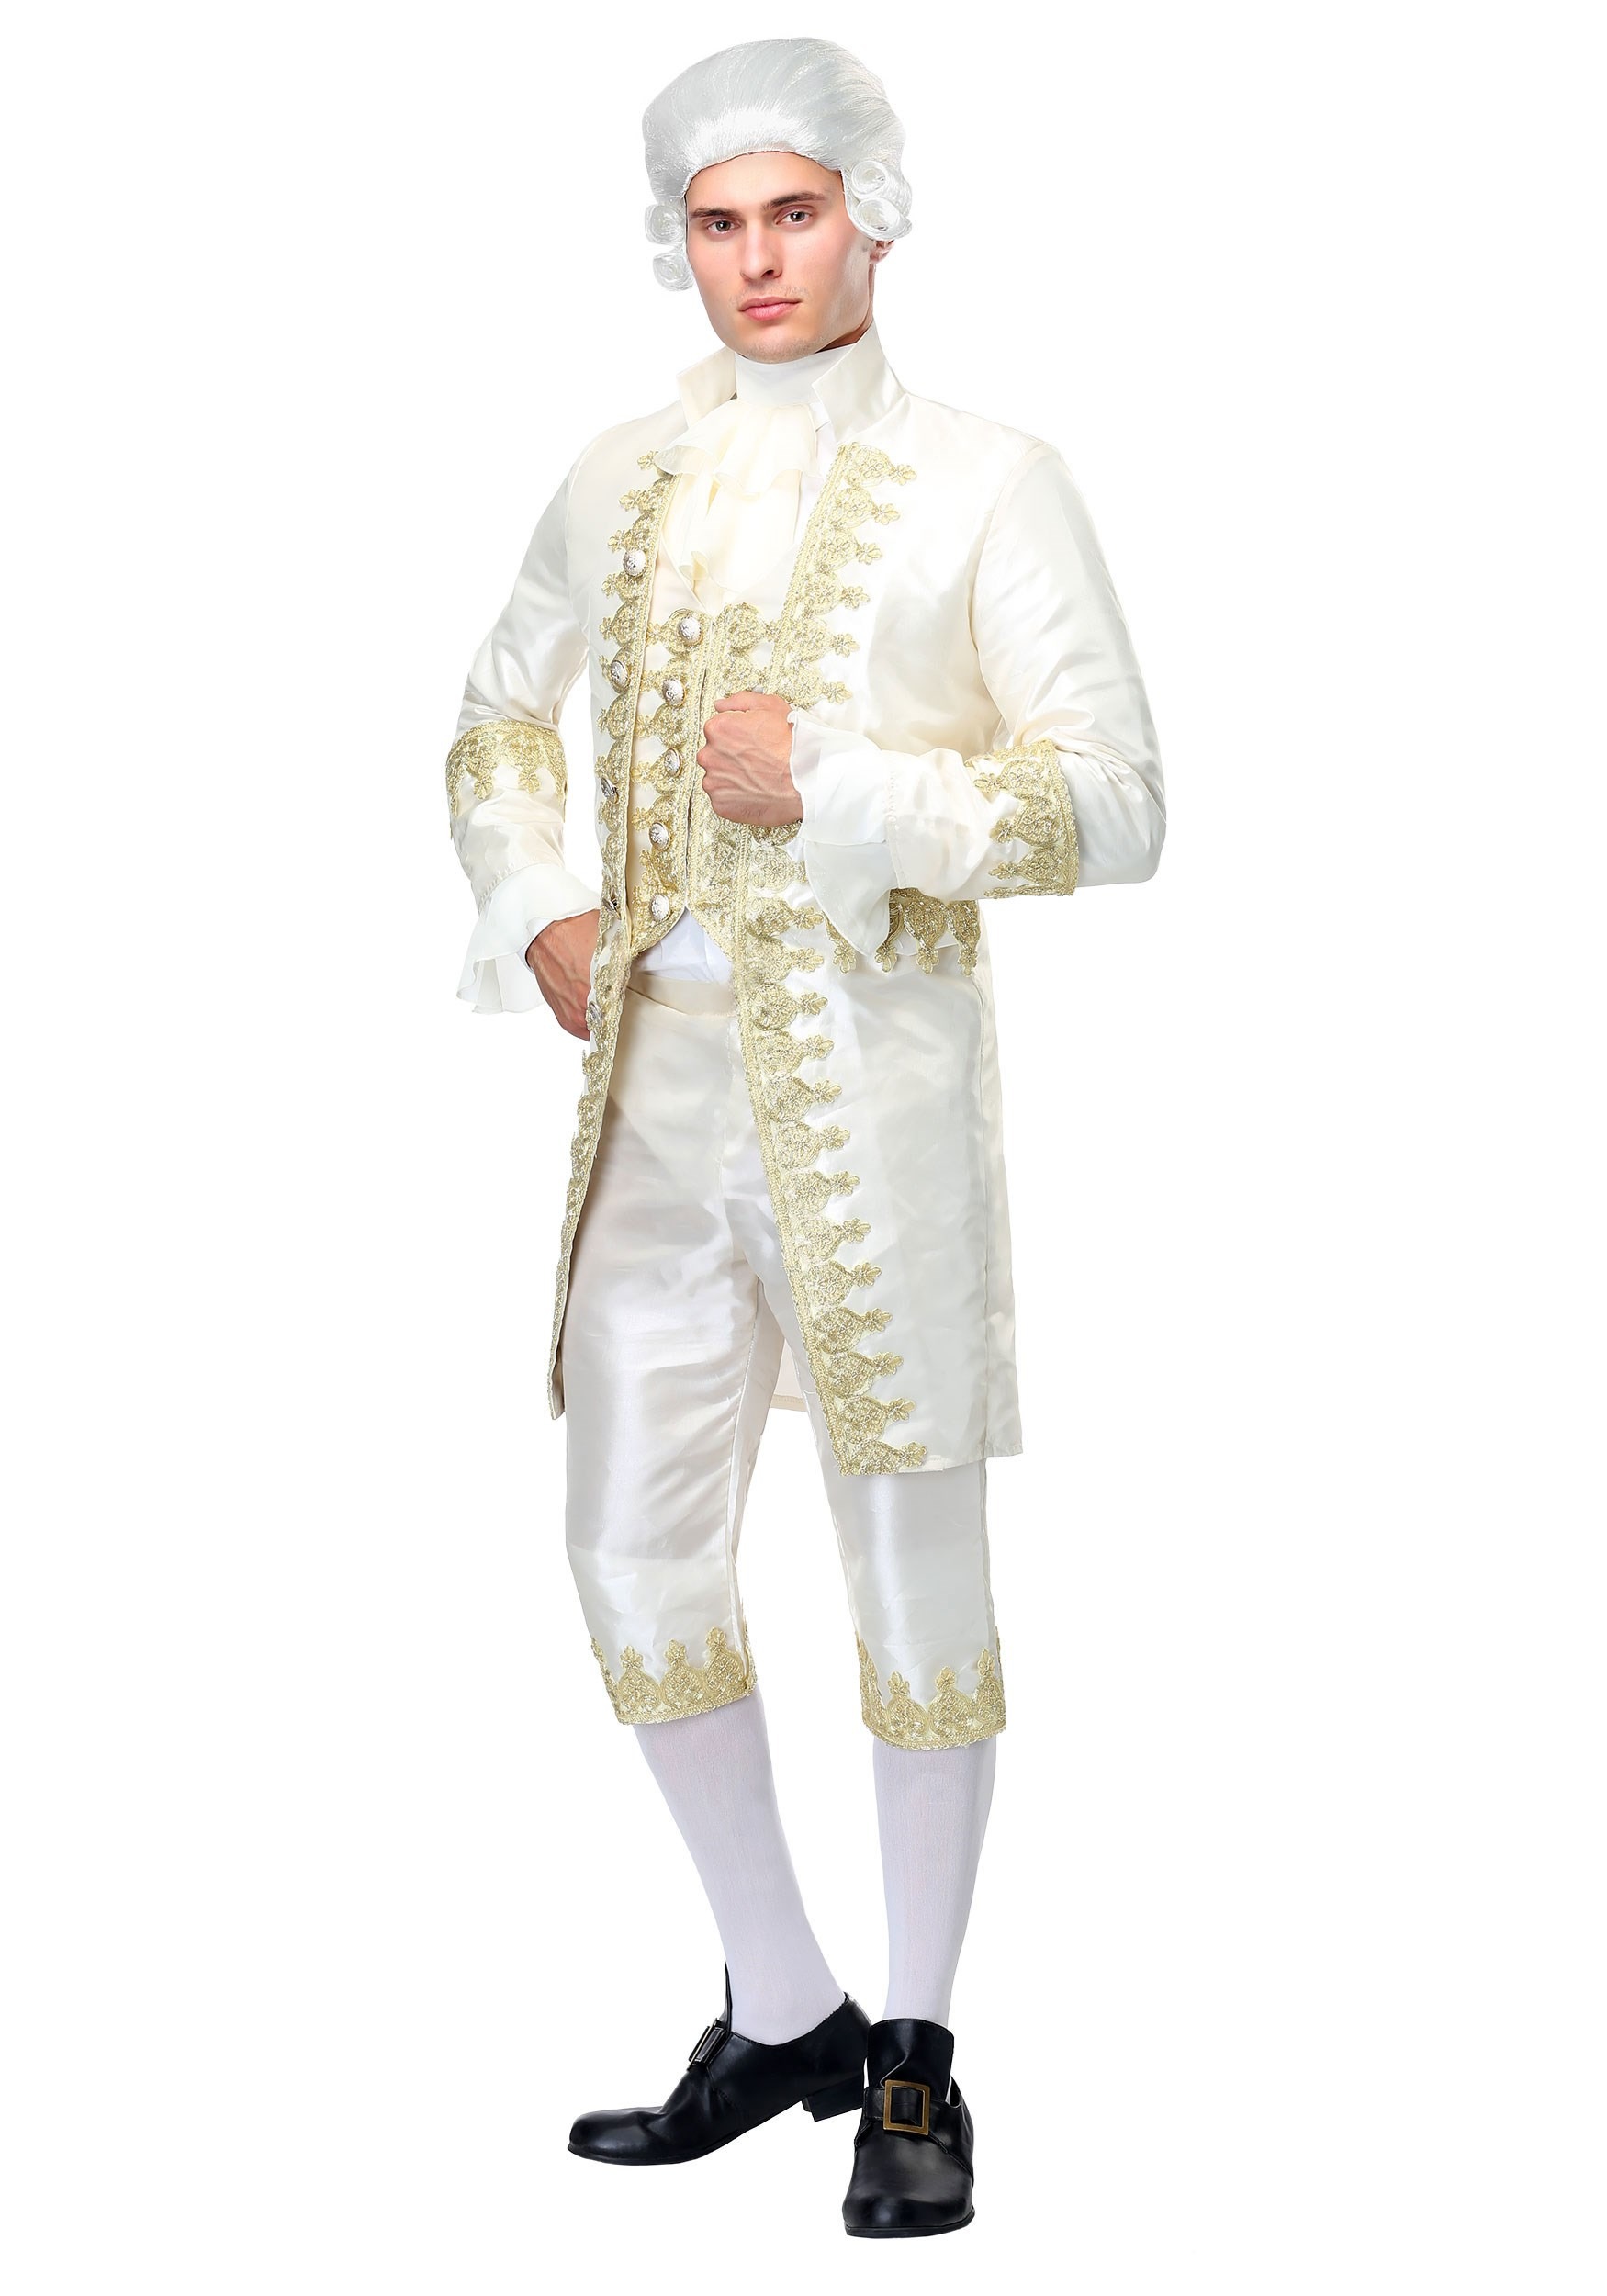 Photos - Fancy Dress Louis FUN Costumes  XVI  Costume for Men Orange/White 